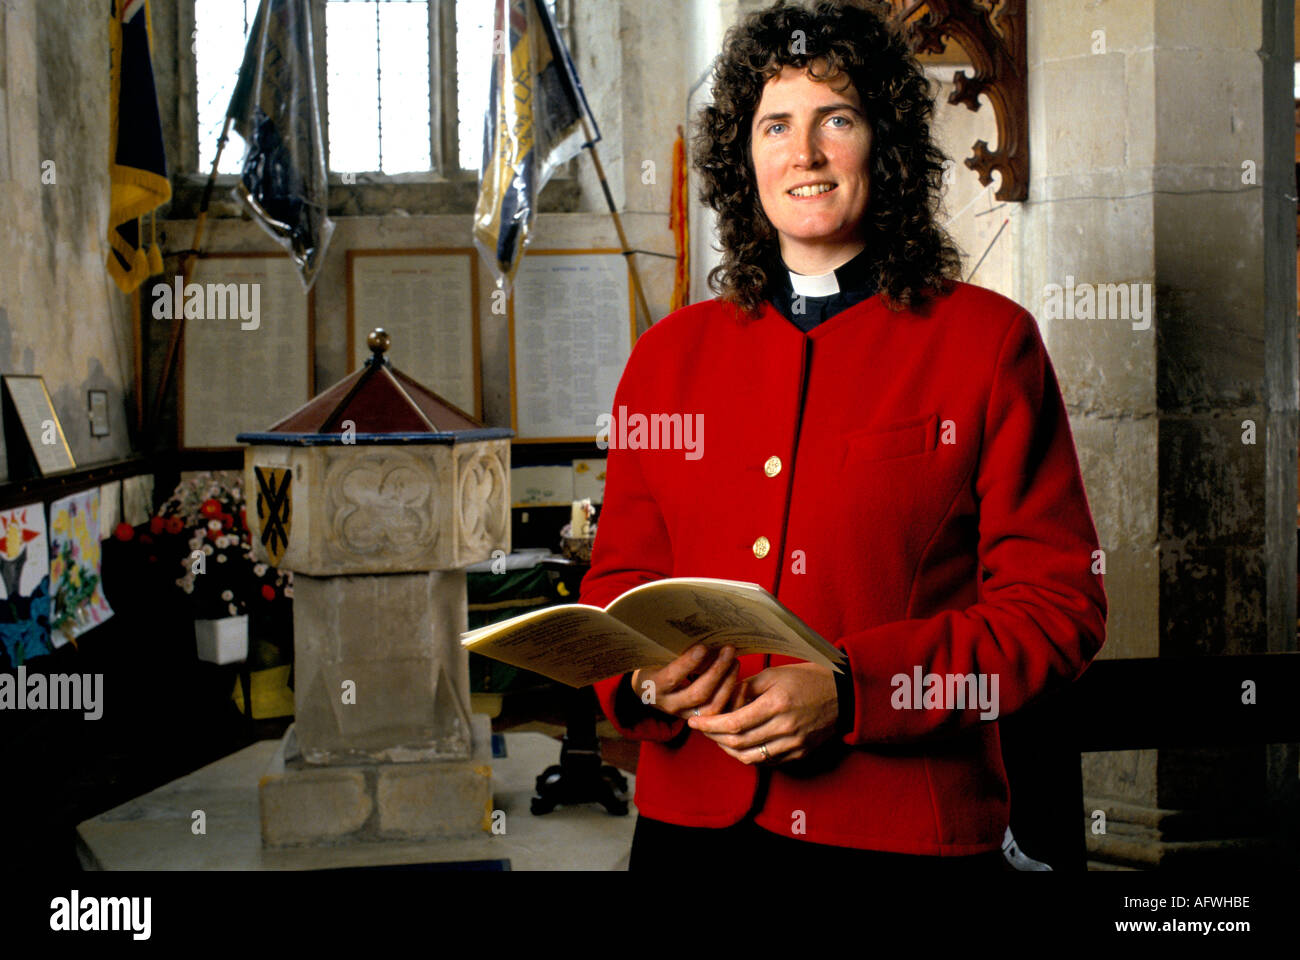 Woman priest, Reverend Dr Anthea Williams portrait London England.    1992 1990s UK HOMER SYKES Stock Photo